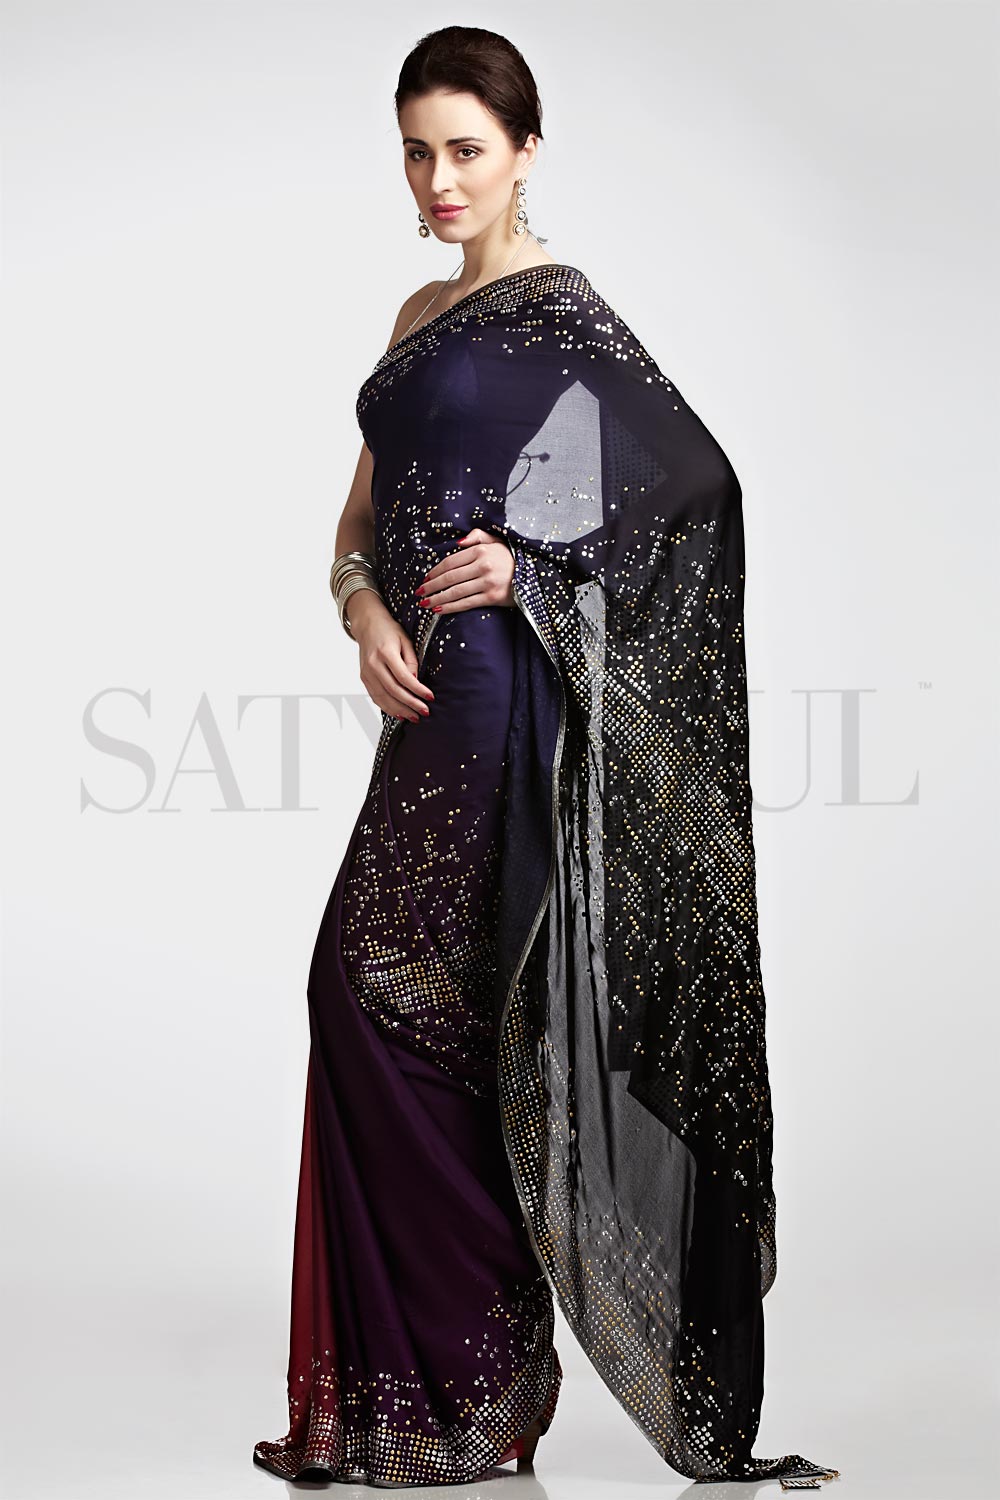 Satya Paul Embroidered Saree 2013 | Indian Bridal Sarees - New Fresh ...